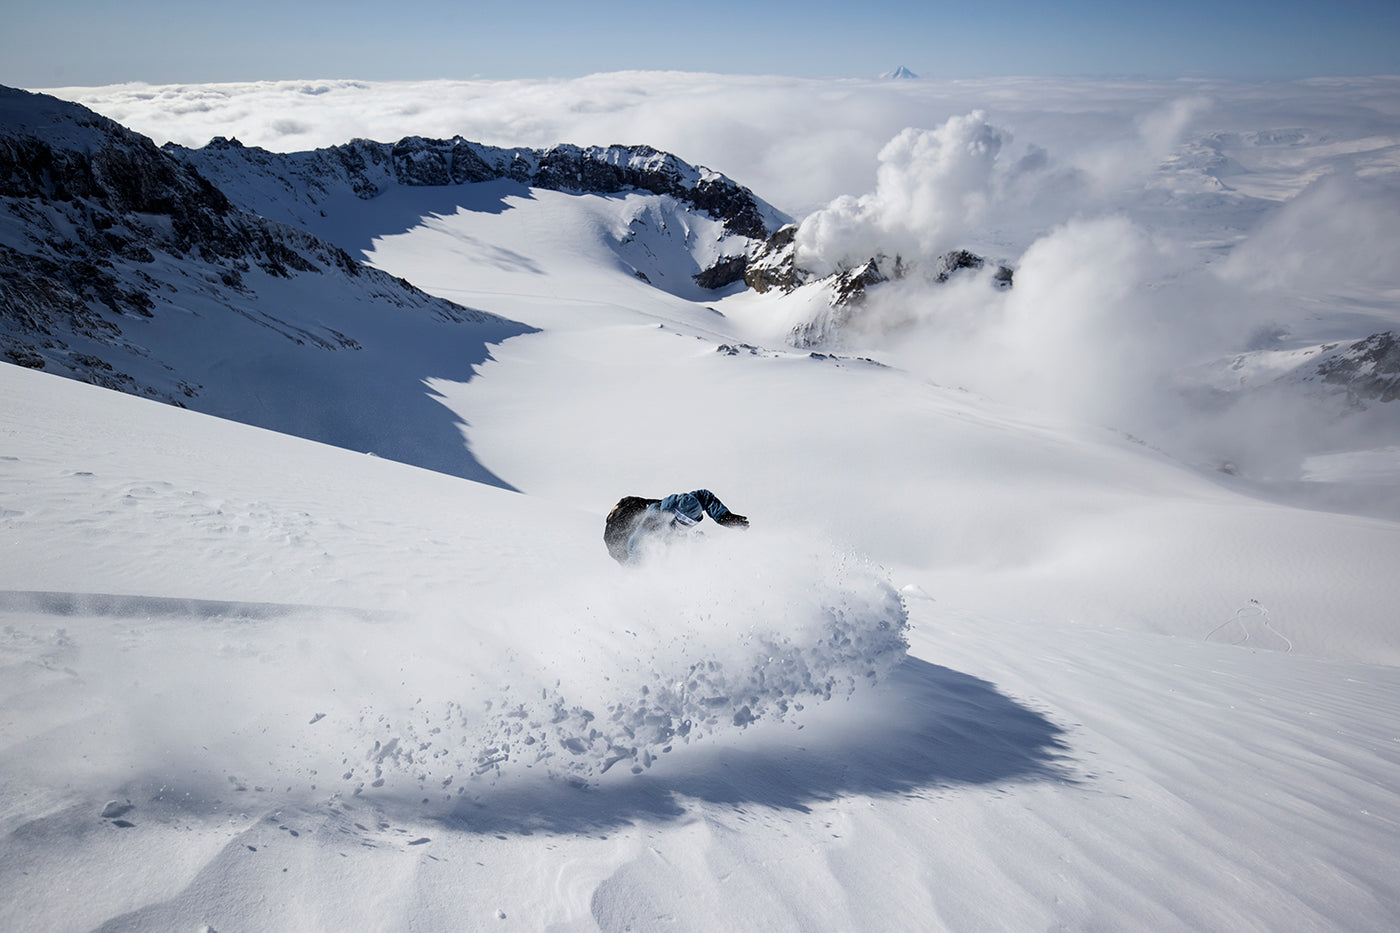 Snowboarder riding down fresh powder slope